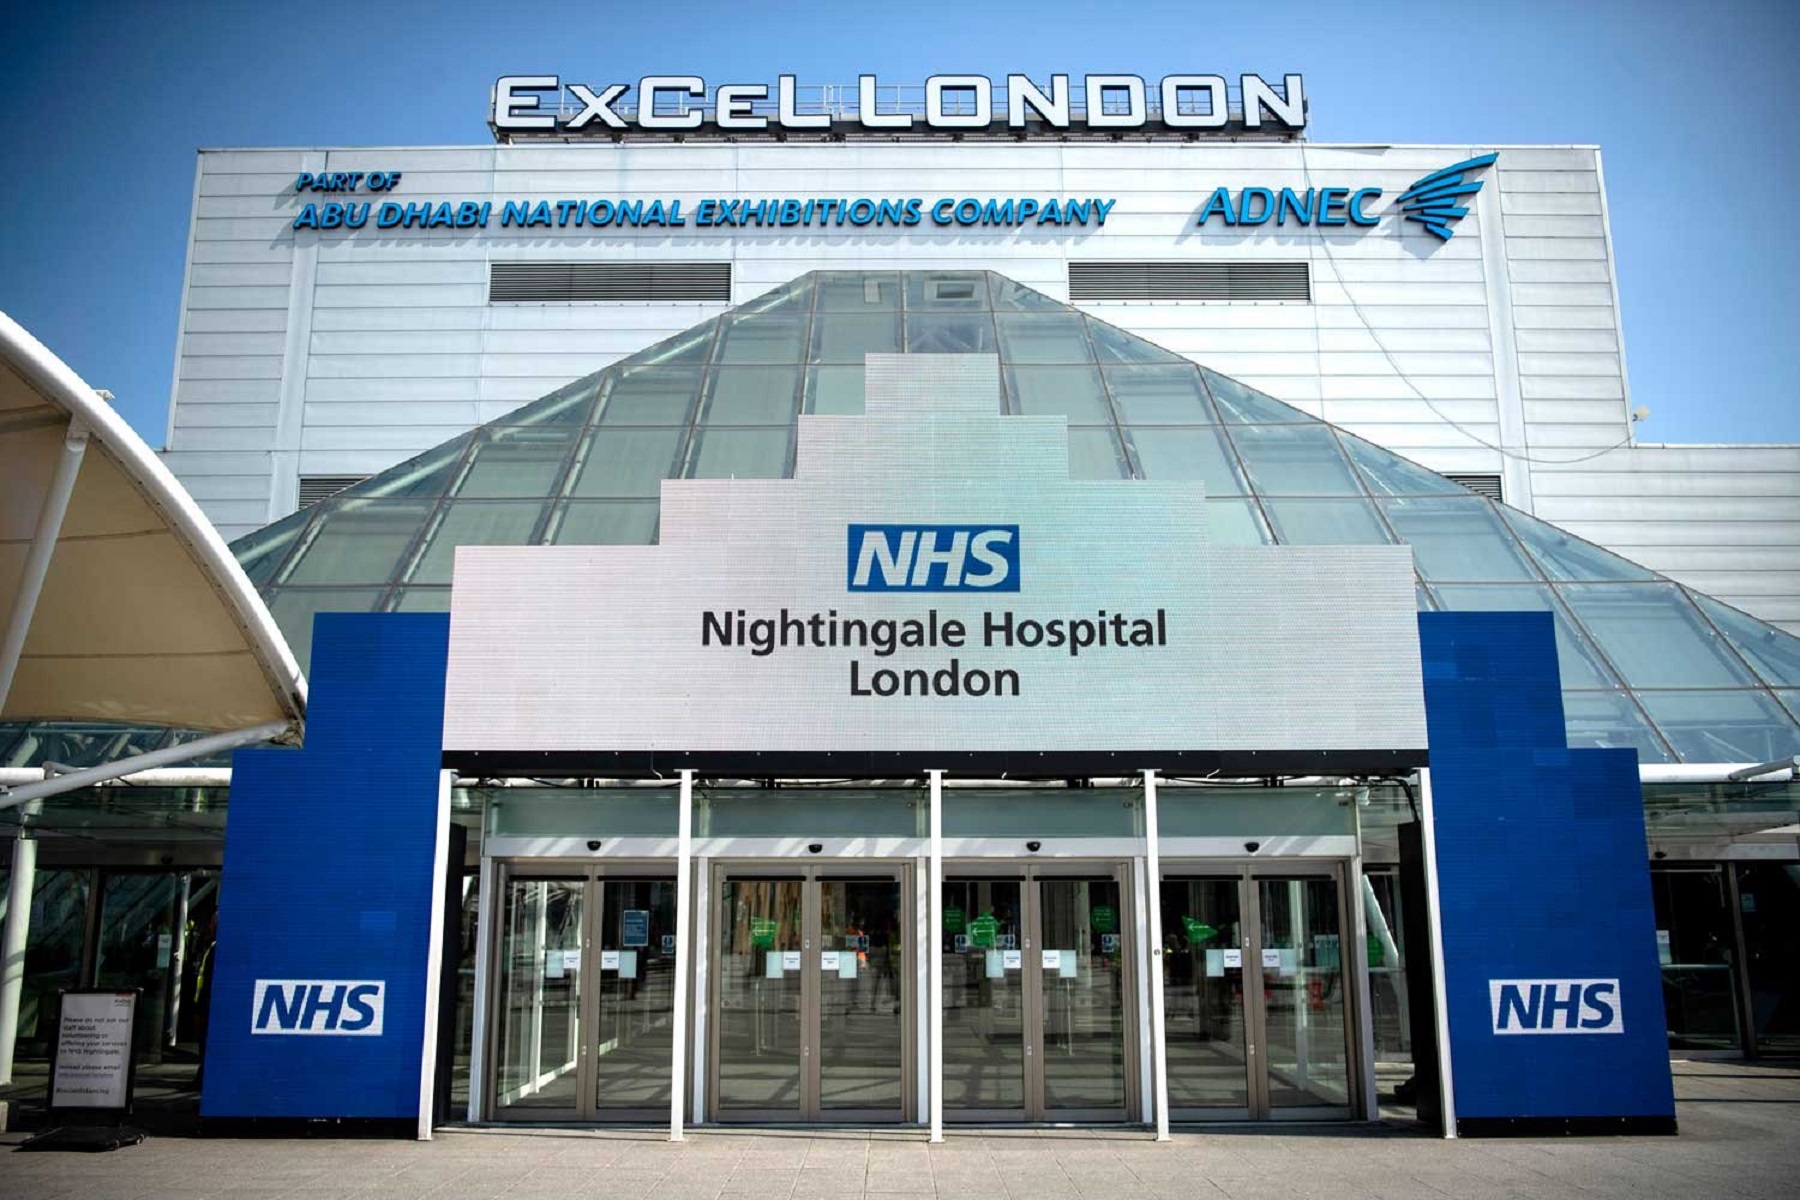 “NHS” M. Βρετανία: Επαναλειτουργία νοσοκομείου λόγω αριθμού ρεκόρ κρουσμάτων